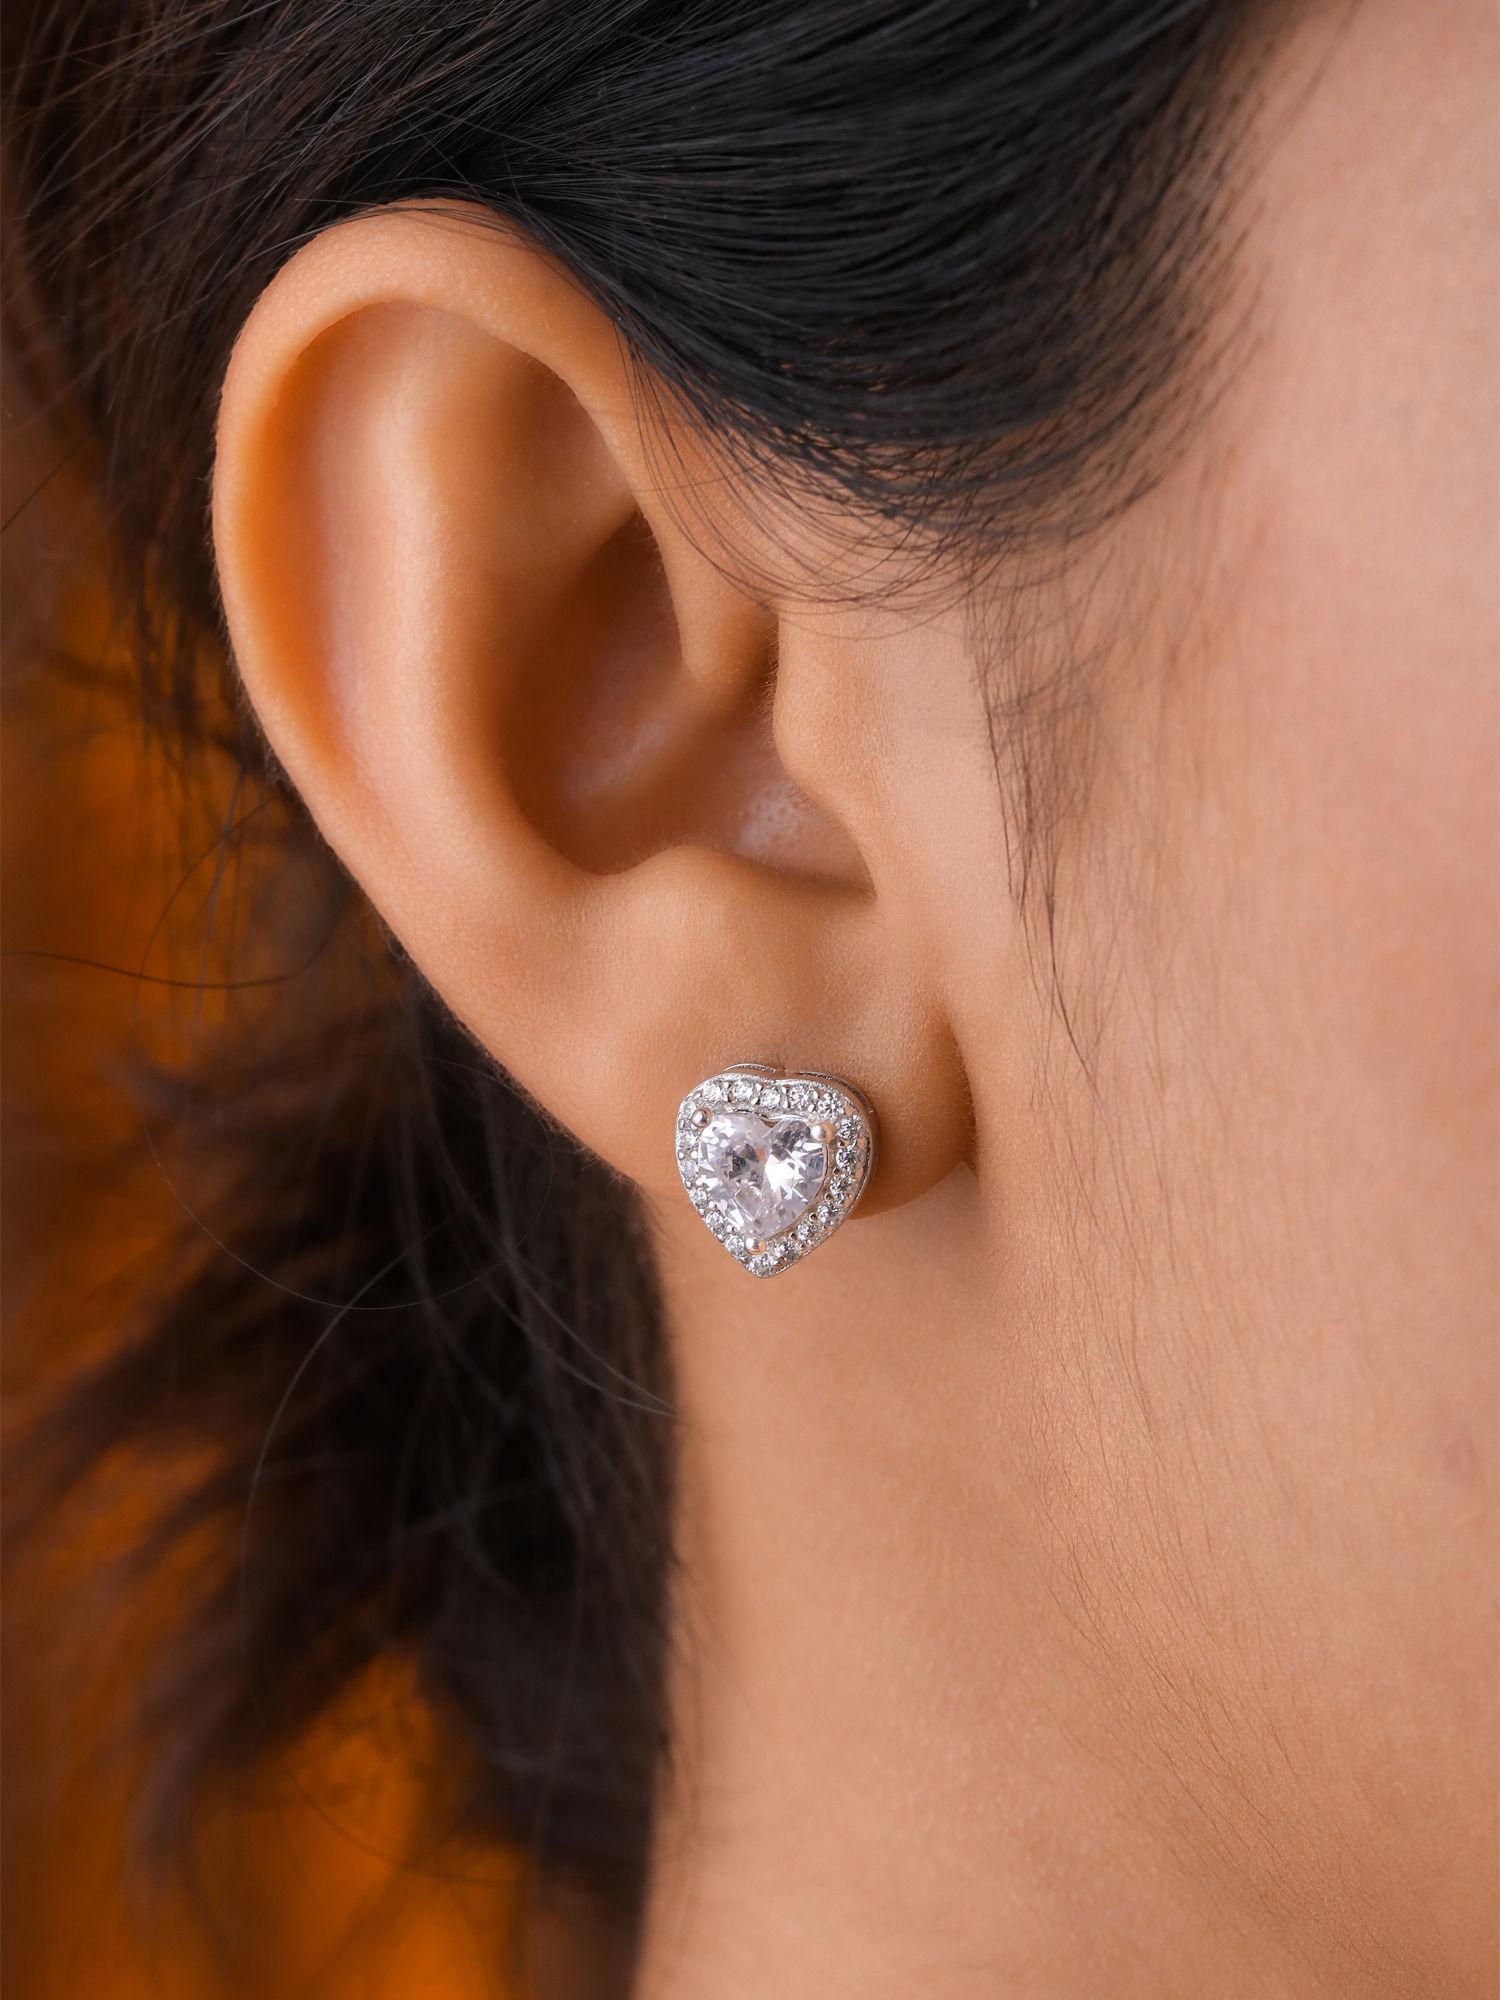 925 sterling silver american diamond heart solitaire stud earrings for women girls adjustable